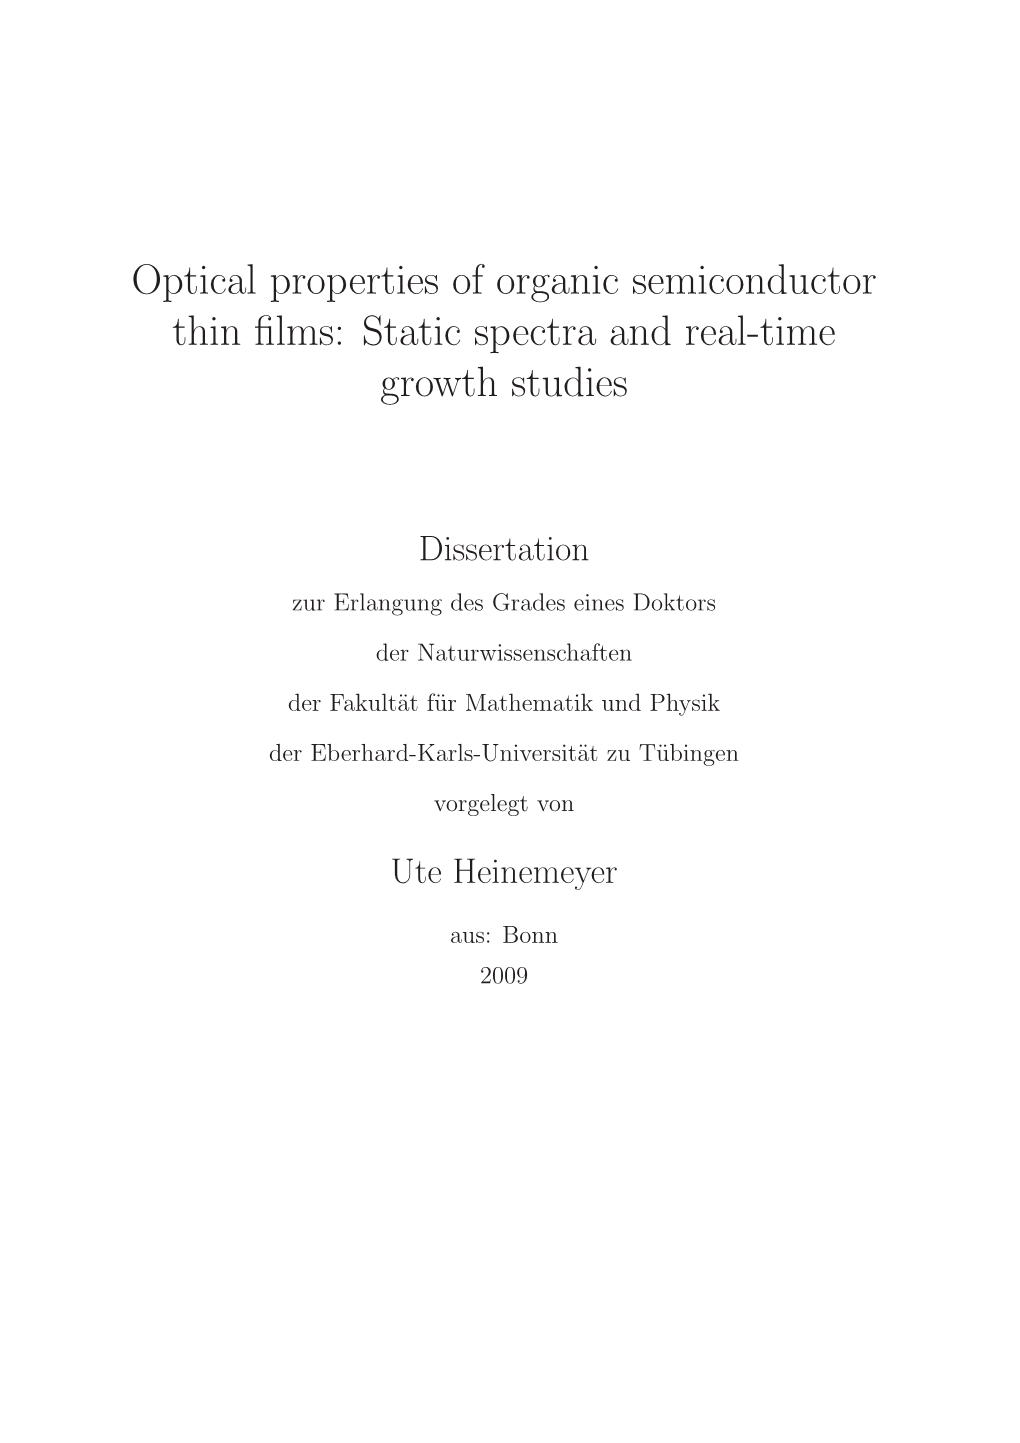 Optical Properties of Organic Semiconductor Thin Films